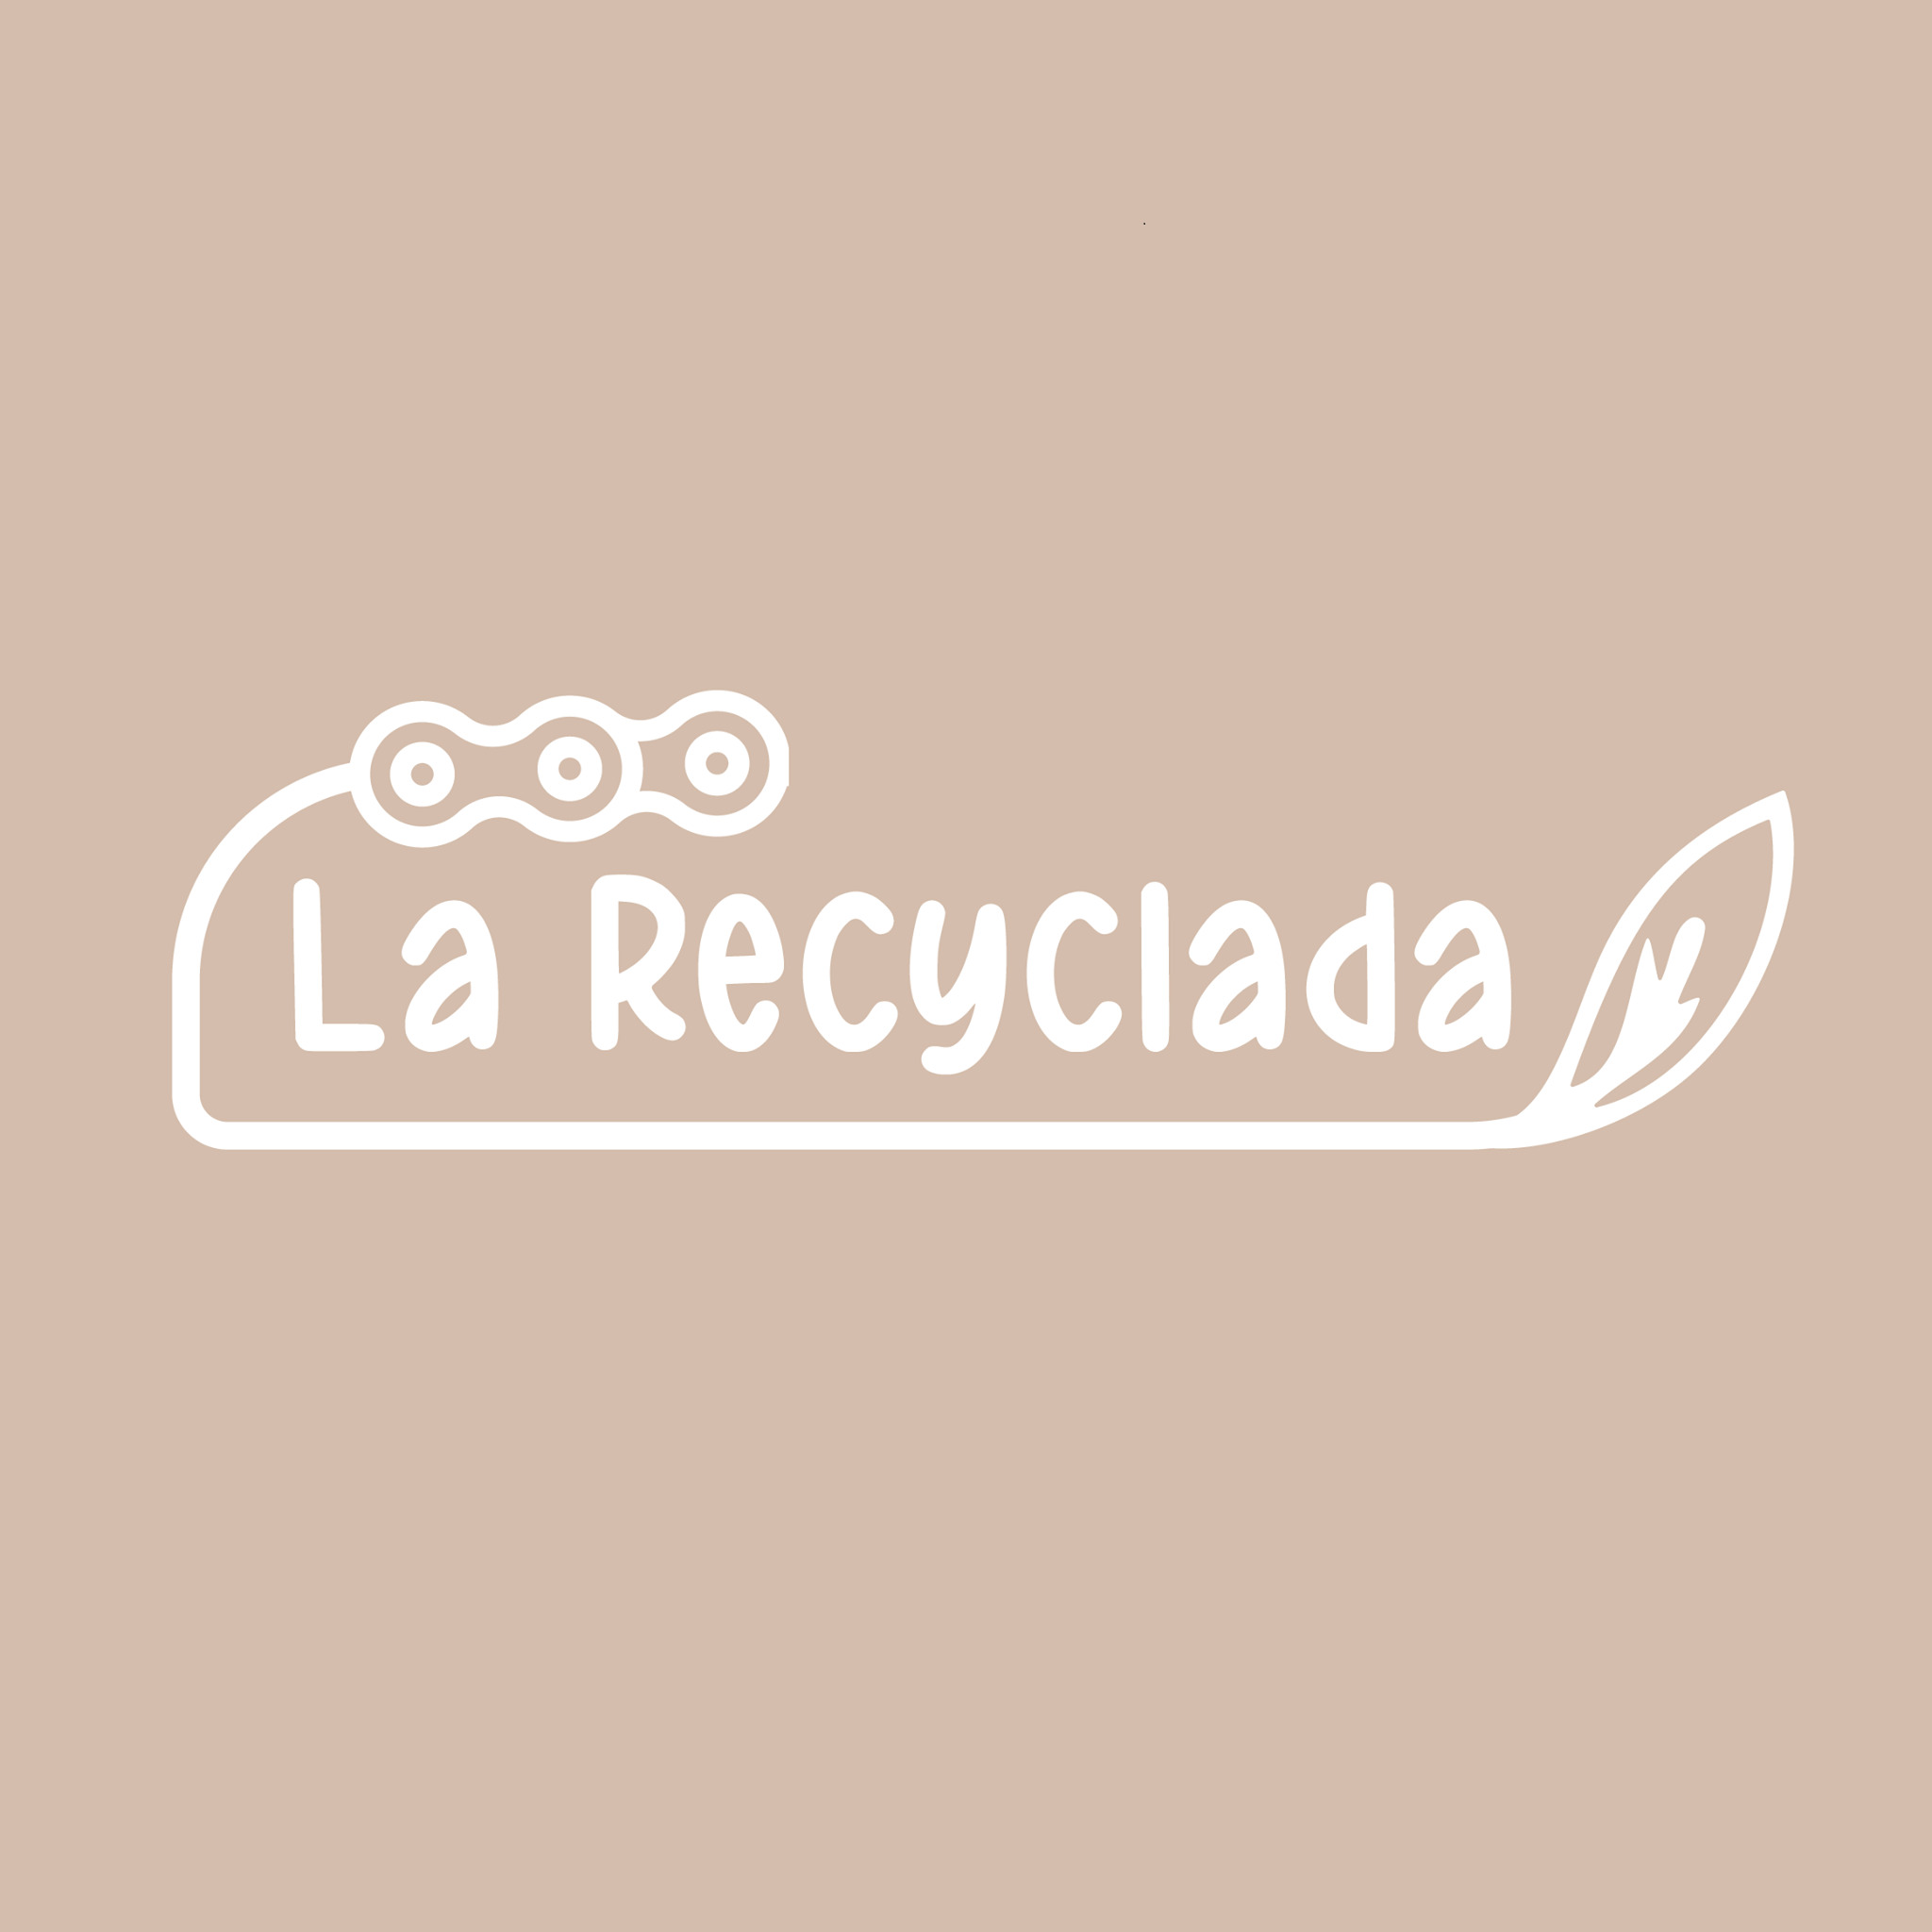 La Recyclada